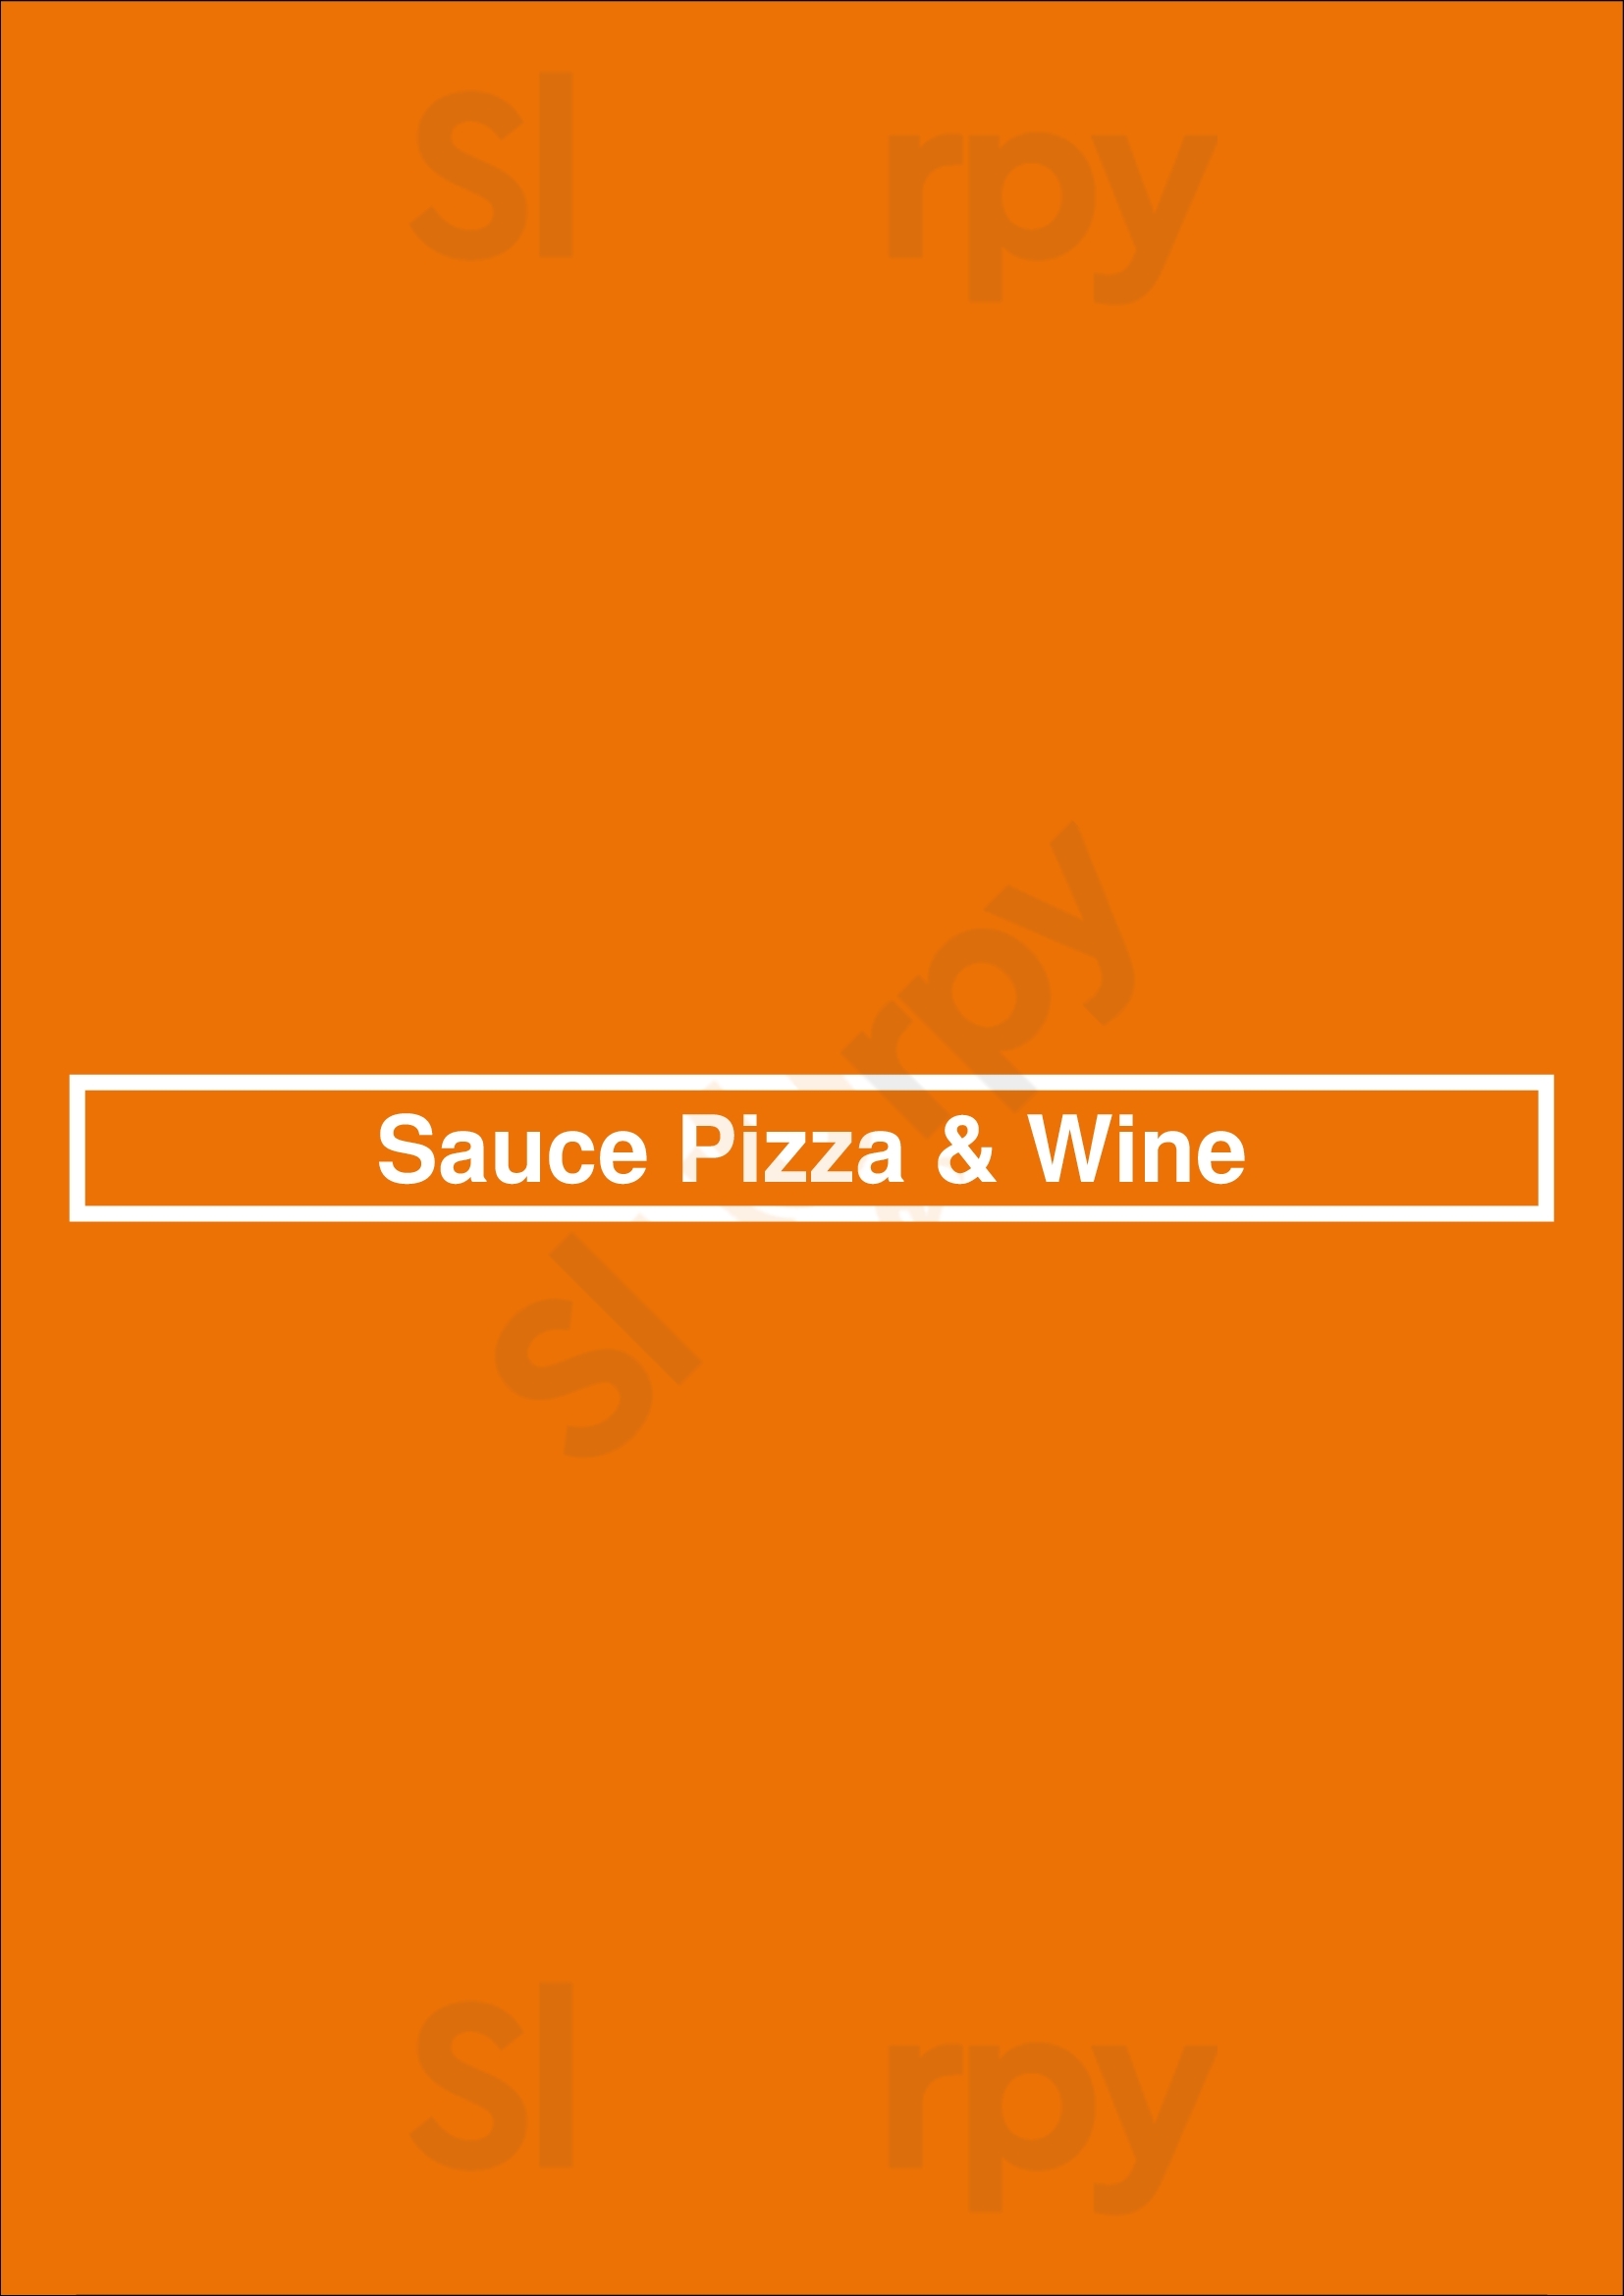 Sauce Pizza & Wine Tucson Menu - 1